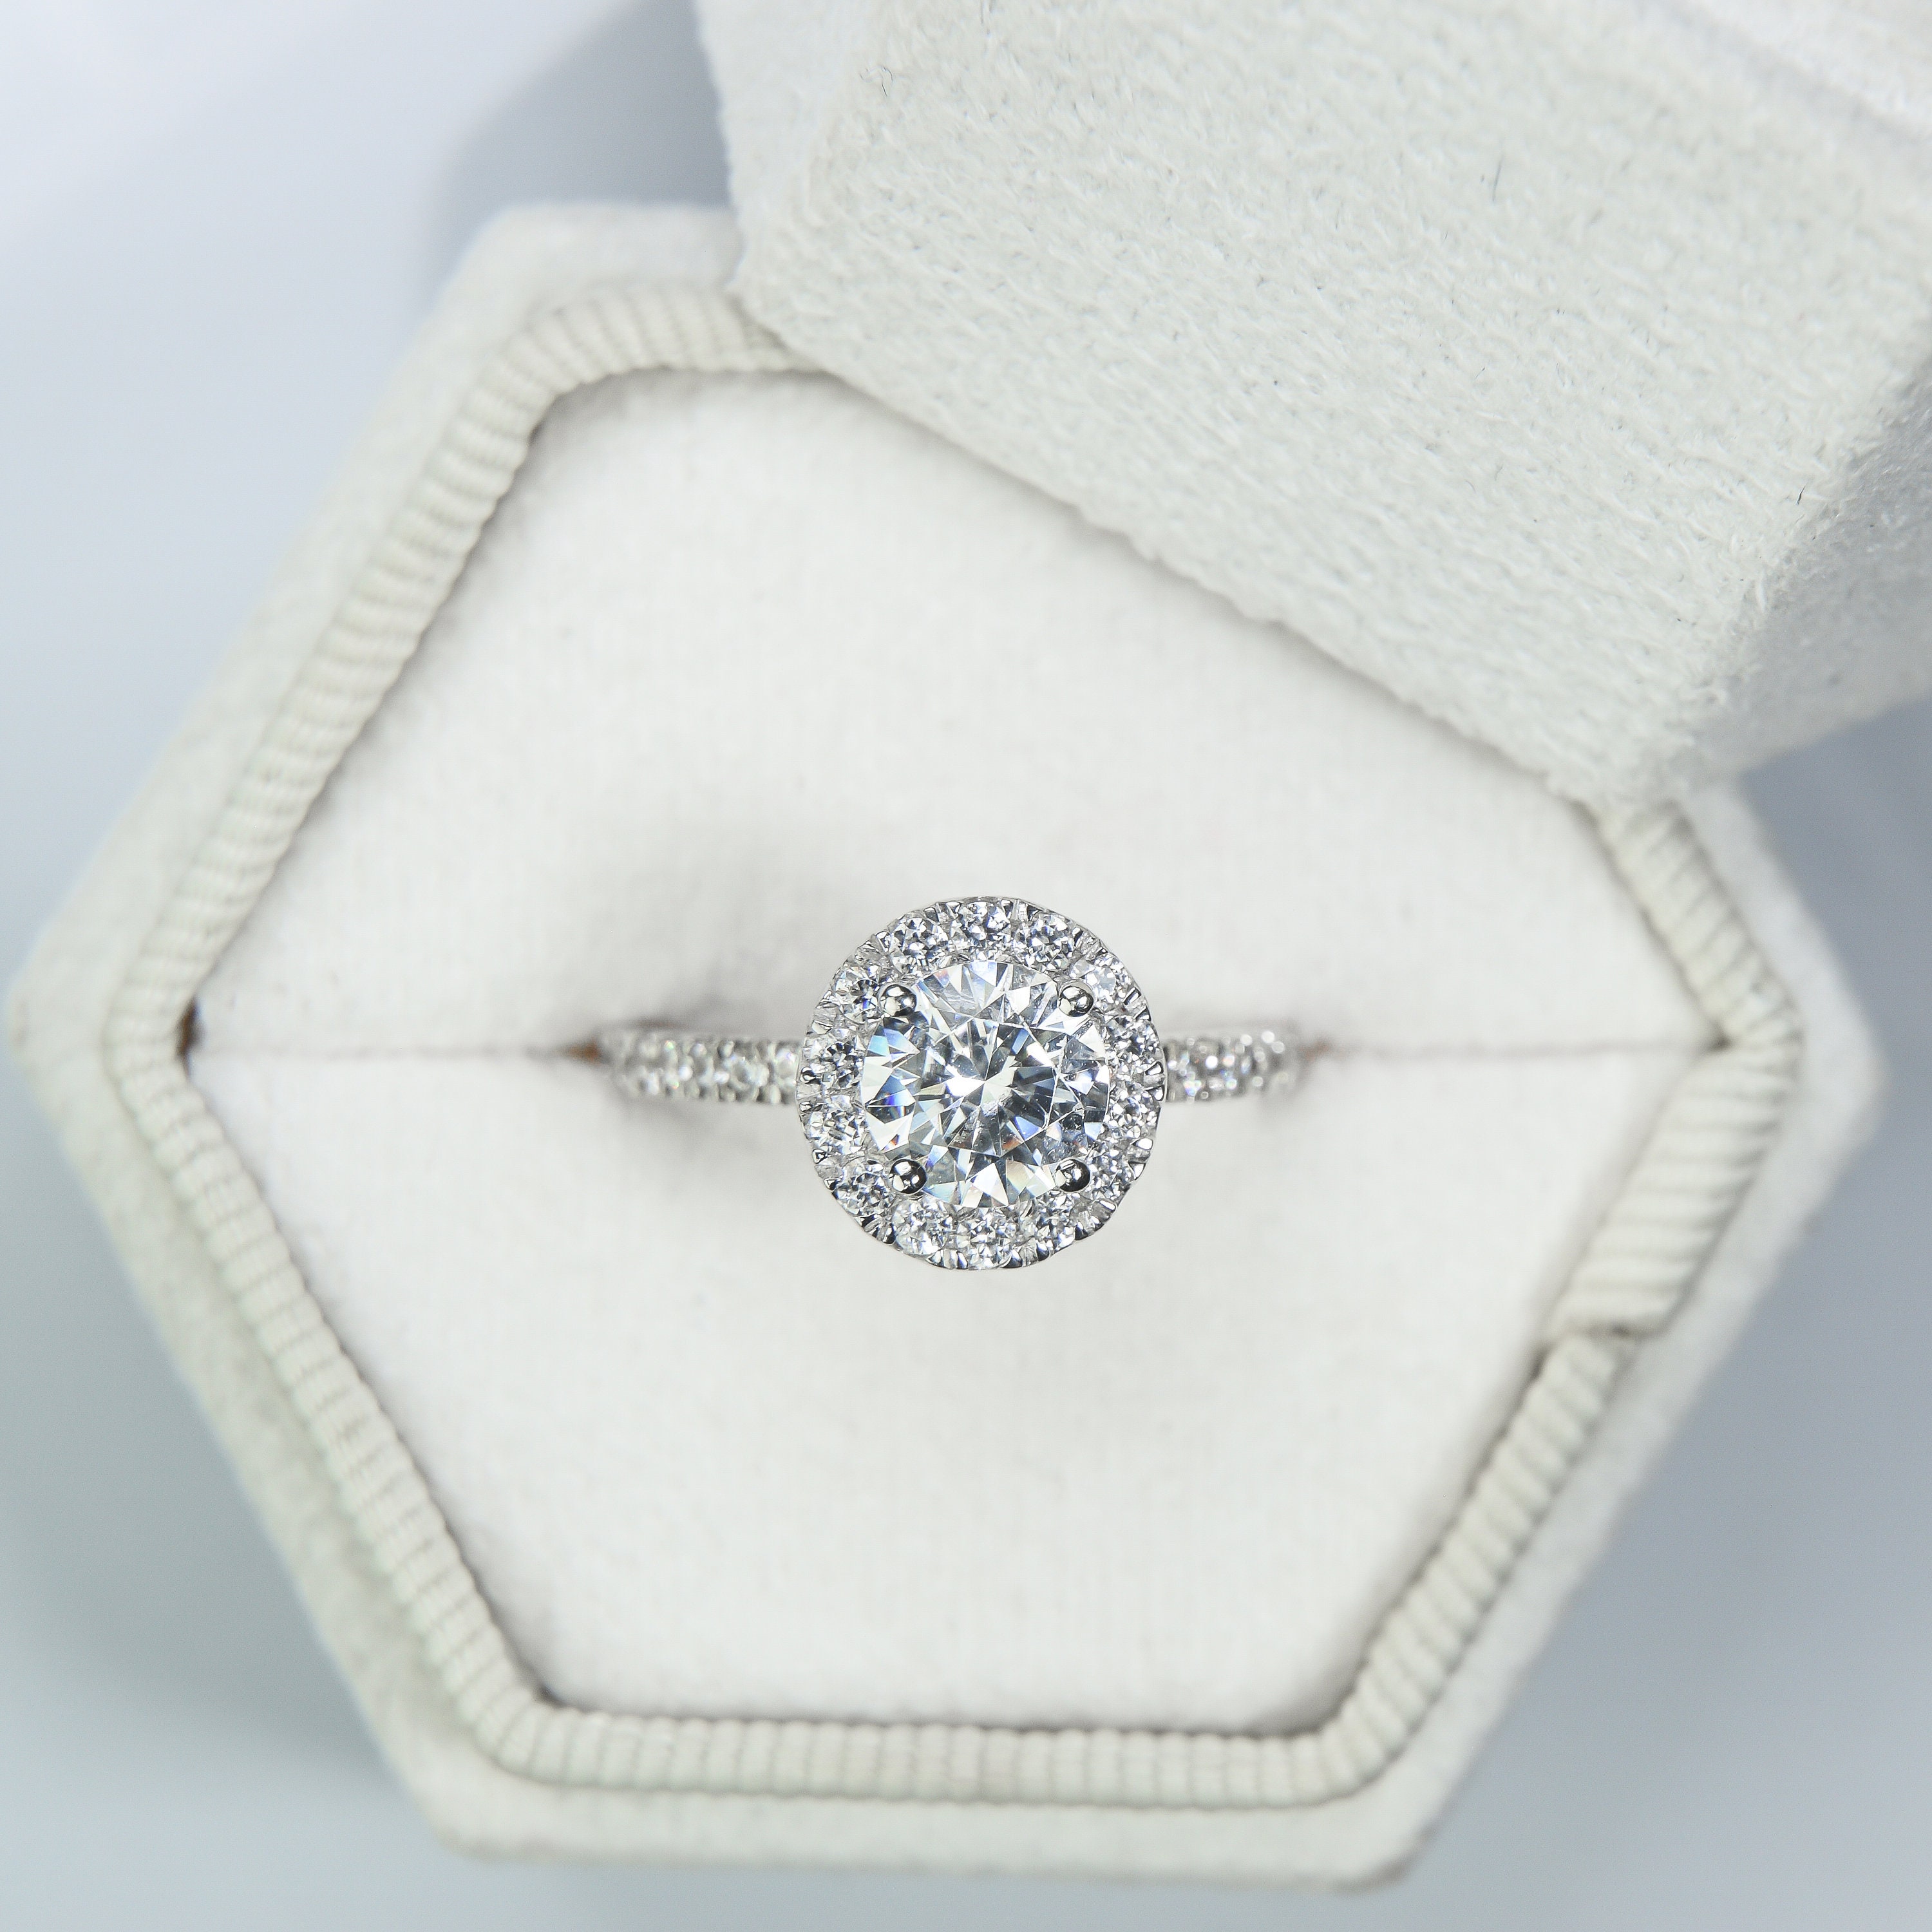 1 CT Round Cut Diamond Ring, Lab Grown Diamond Engagement Ring